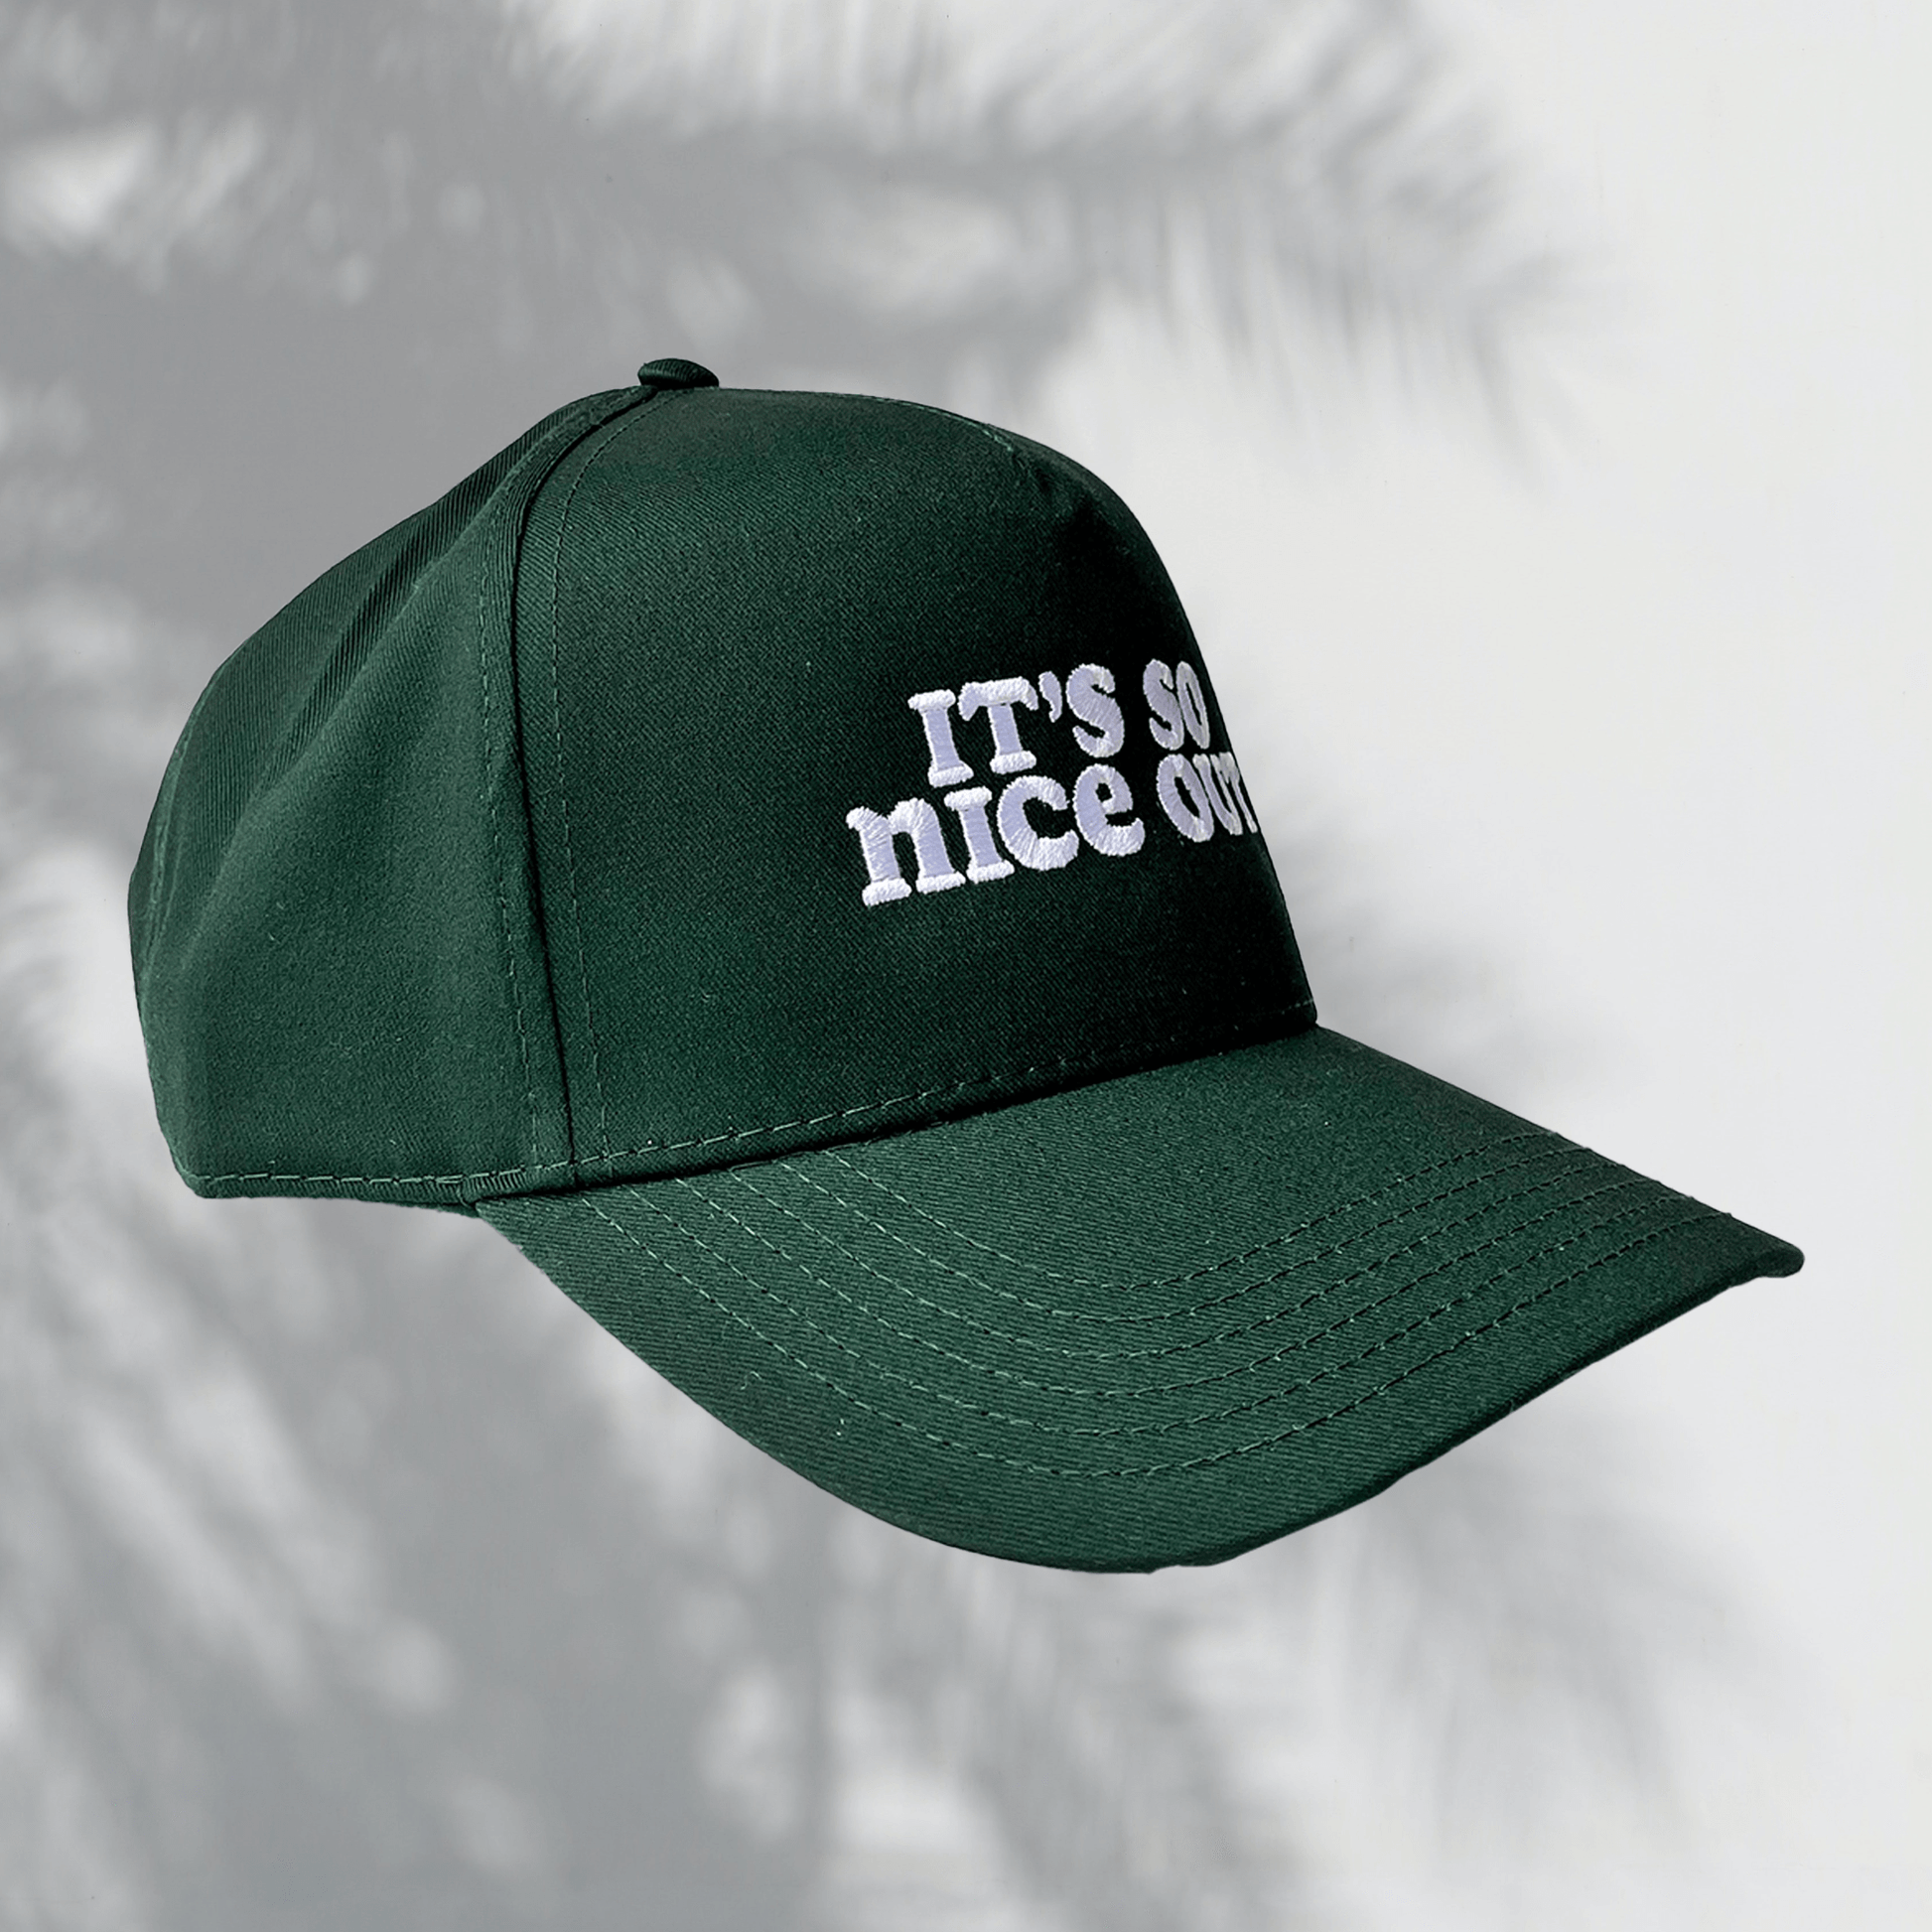 We've been rocking the Quality Hooch trucker hat all summer long